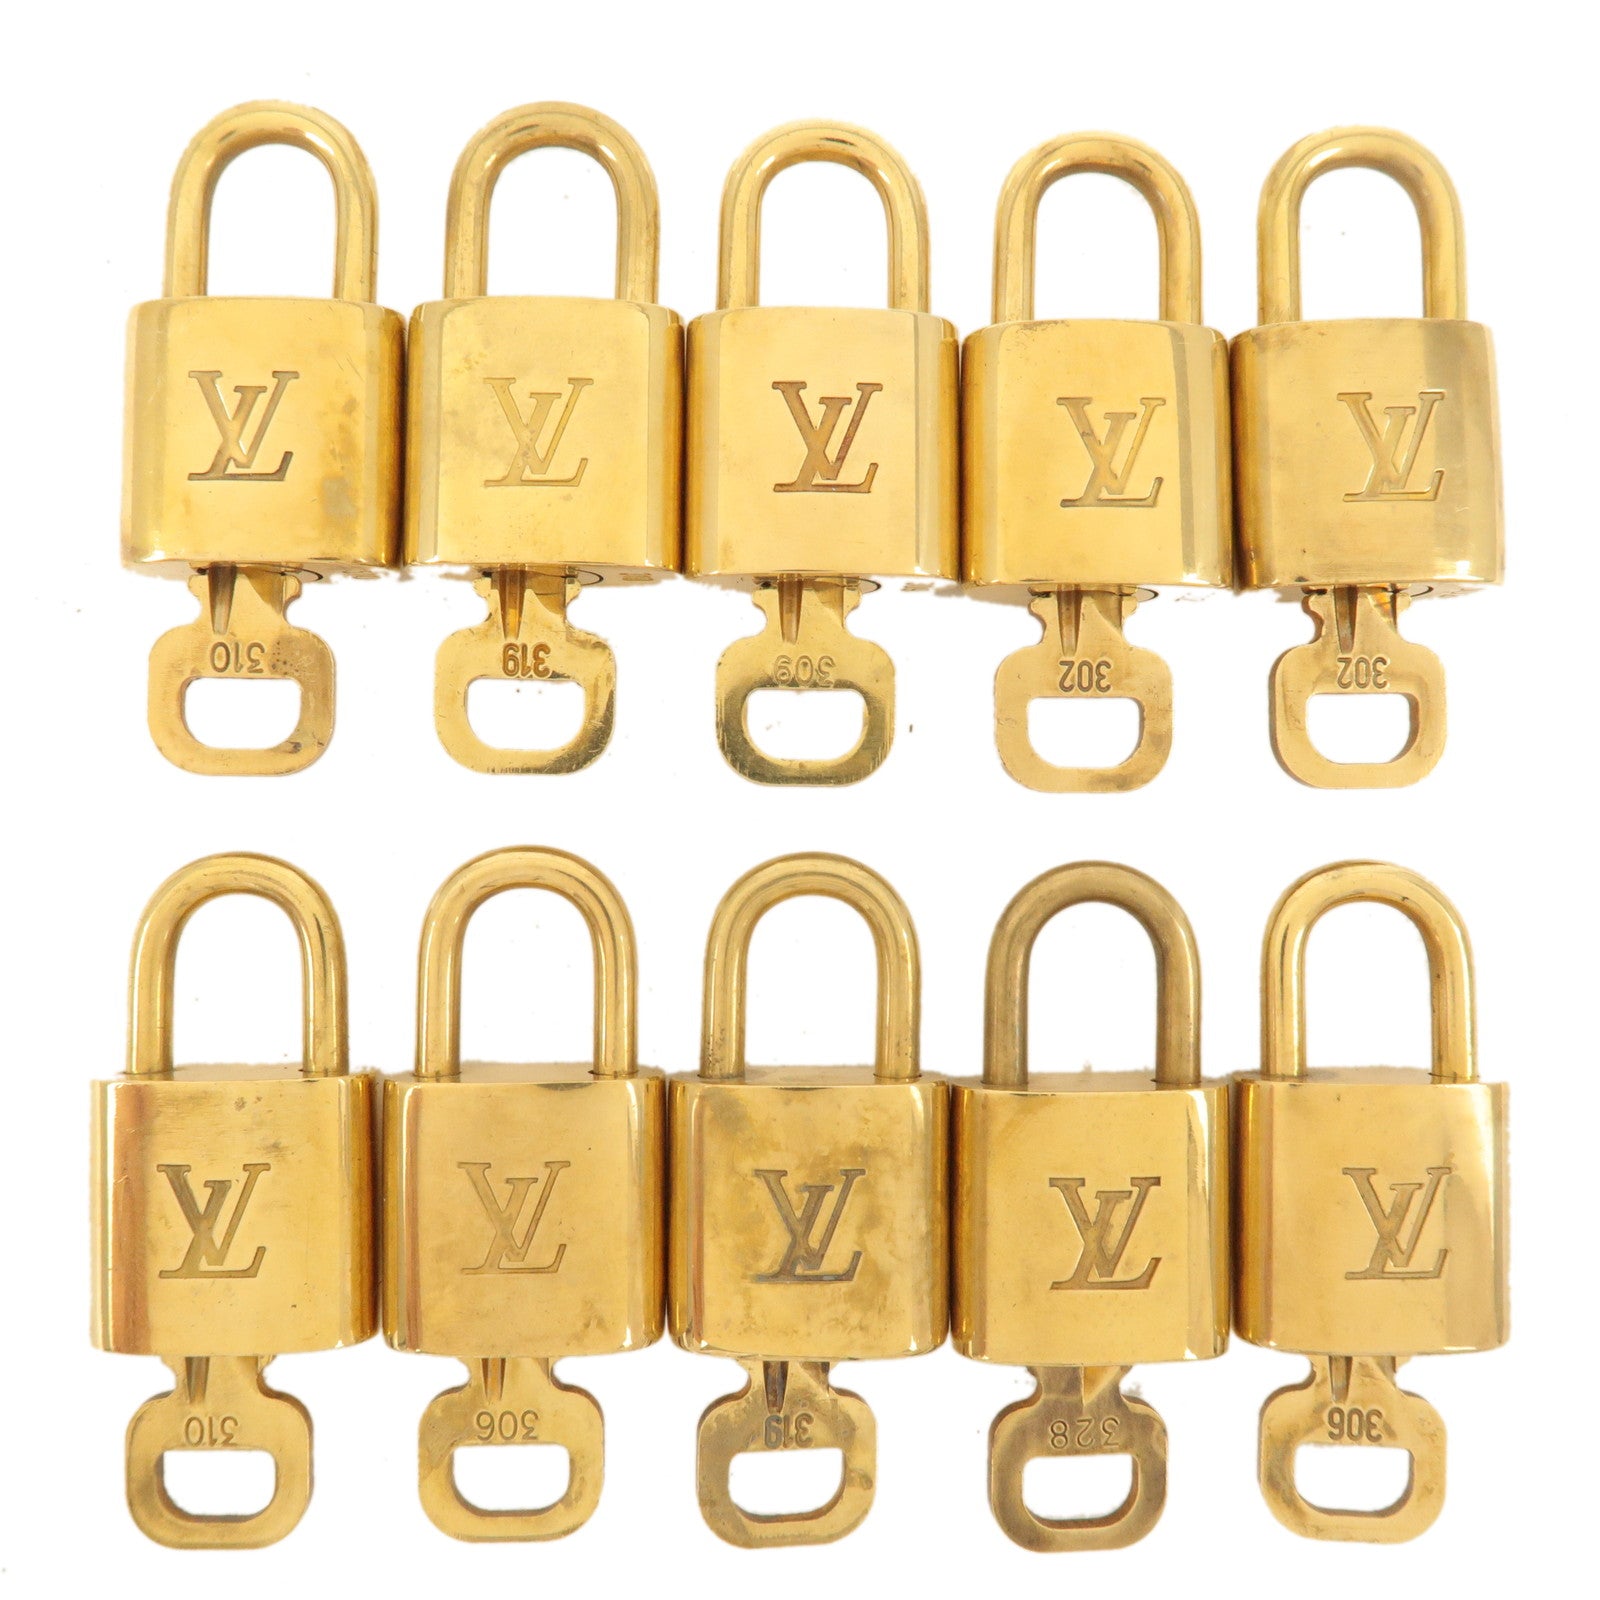 Louis Vuitton Cadenas padlocks, set of 5 from Japan